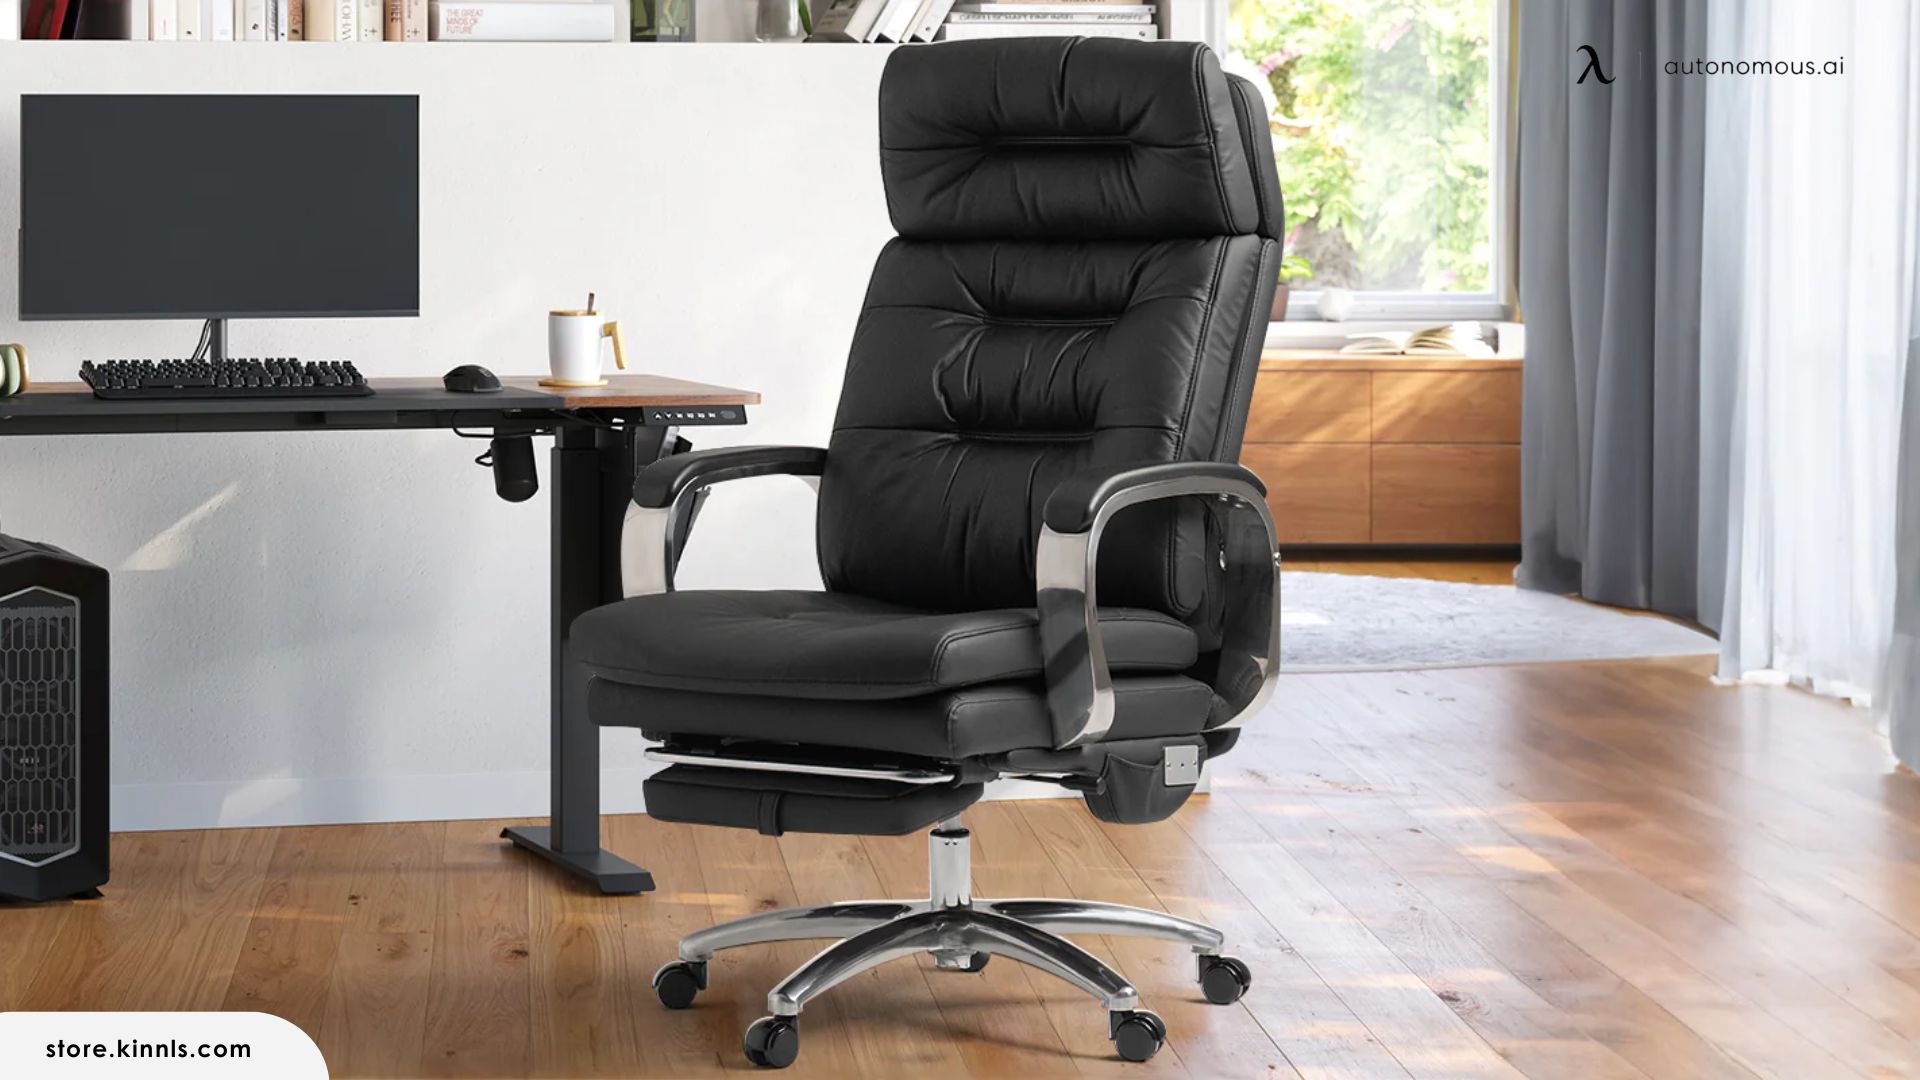 Vane Massage Office Chair